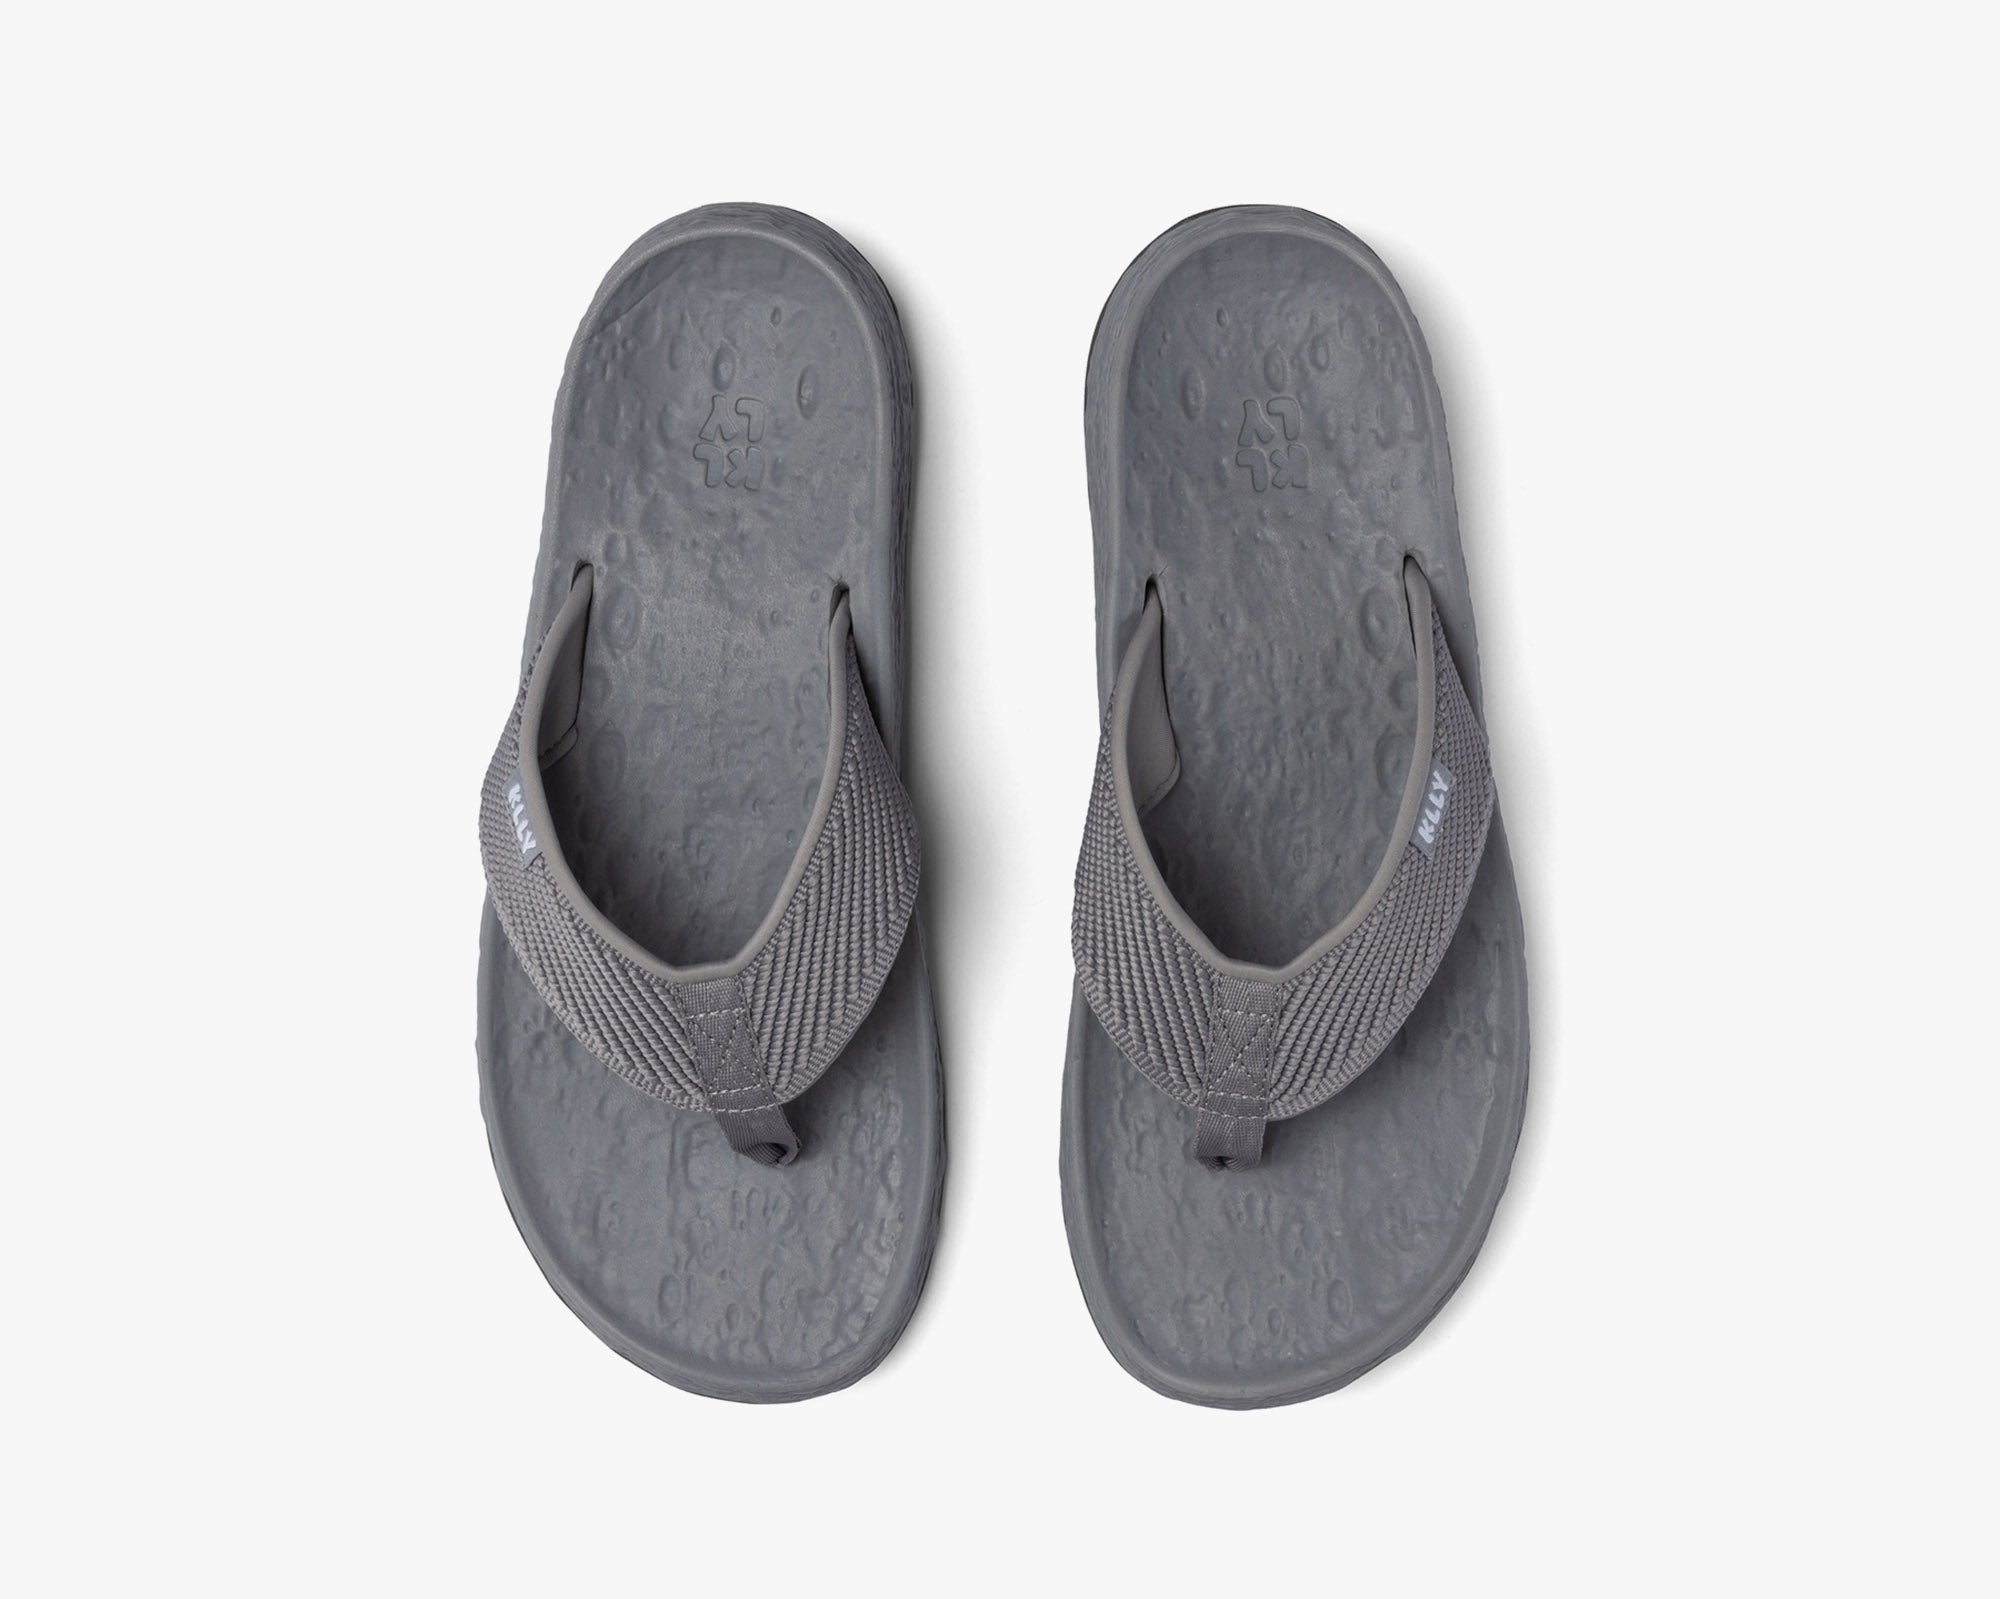 Men’s beach sandals - klly sandals wolf moon​